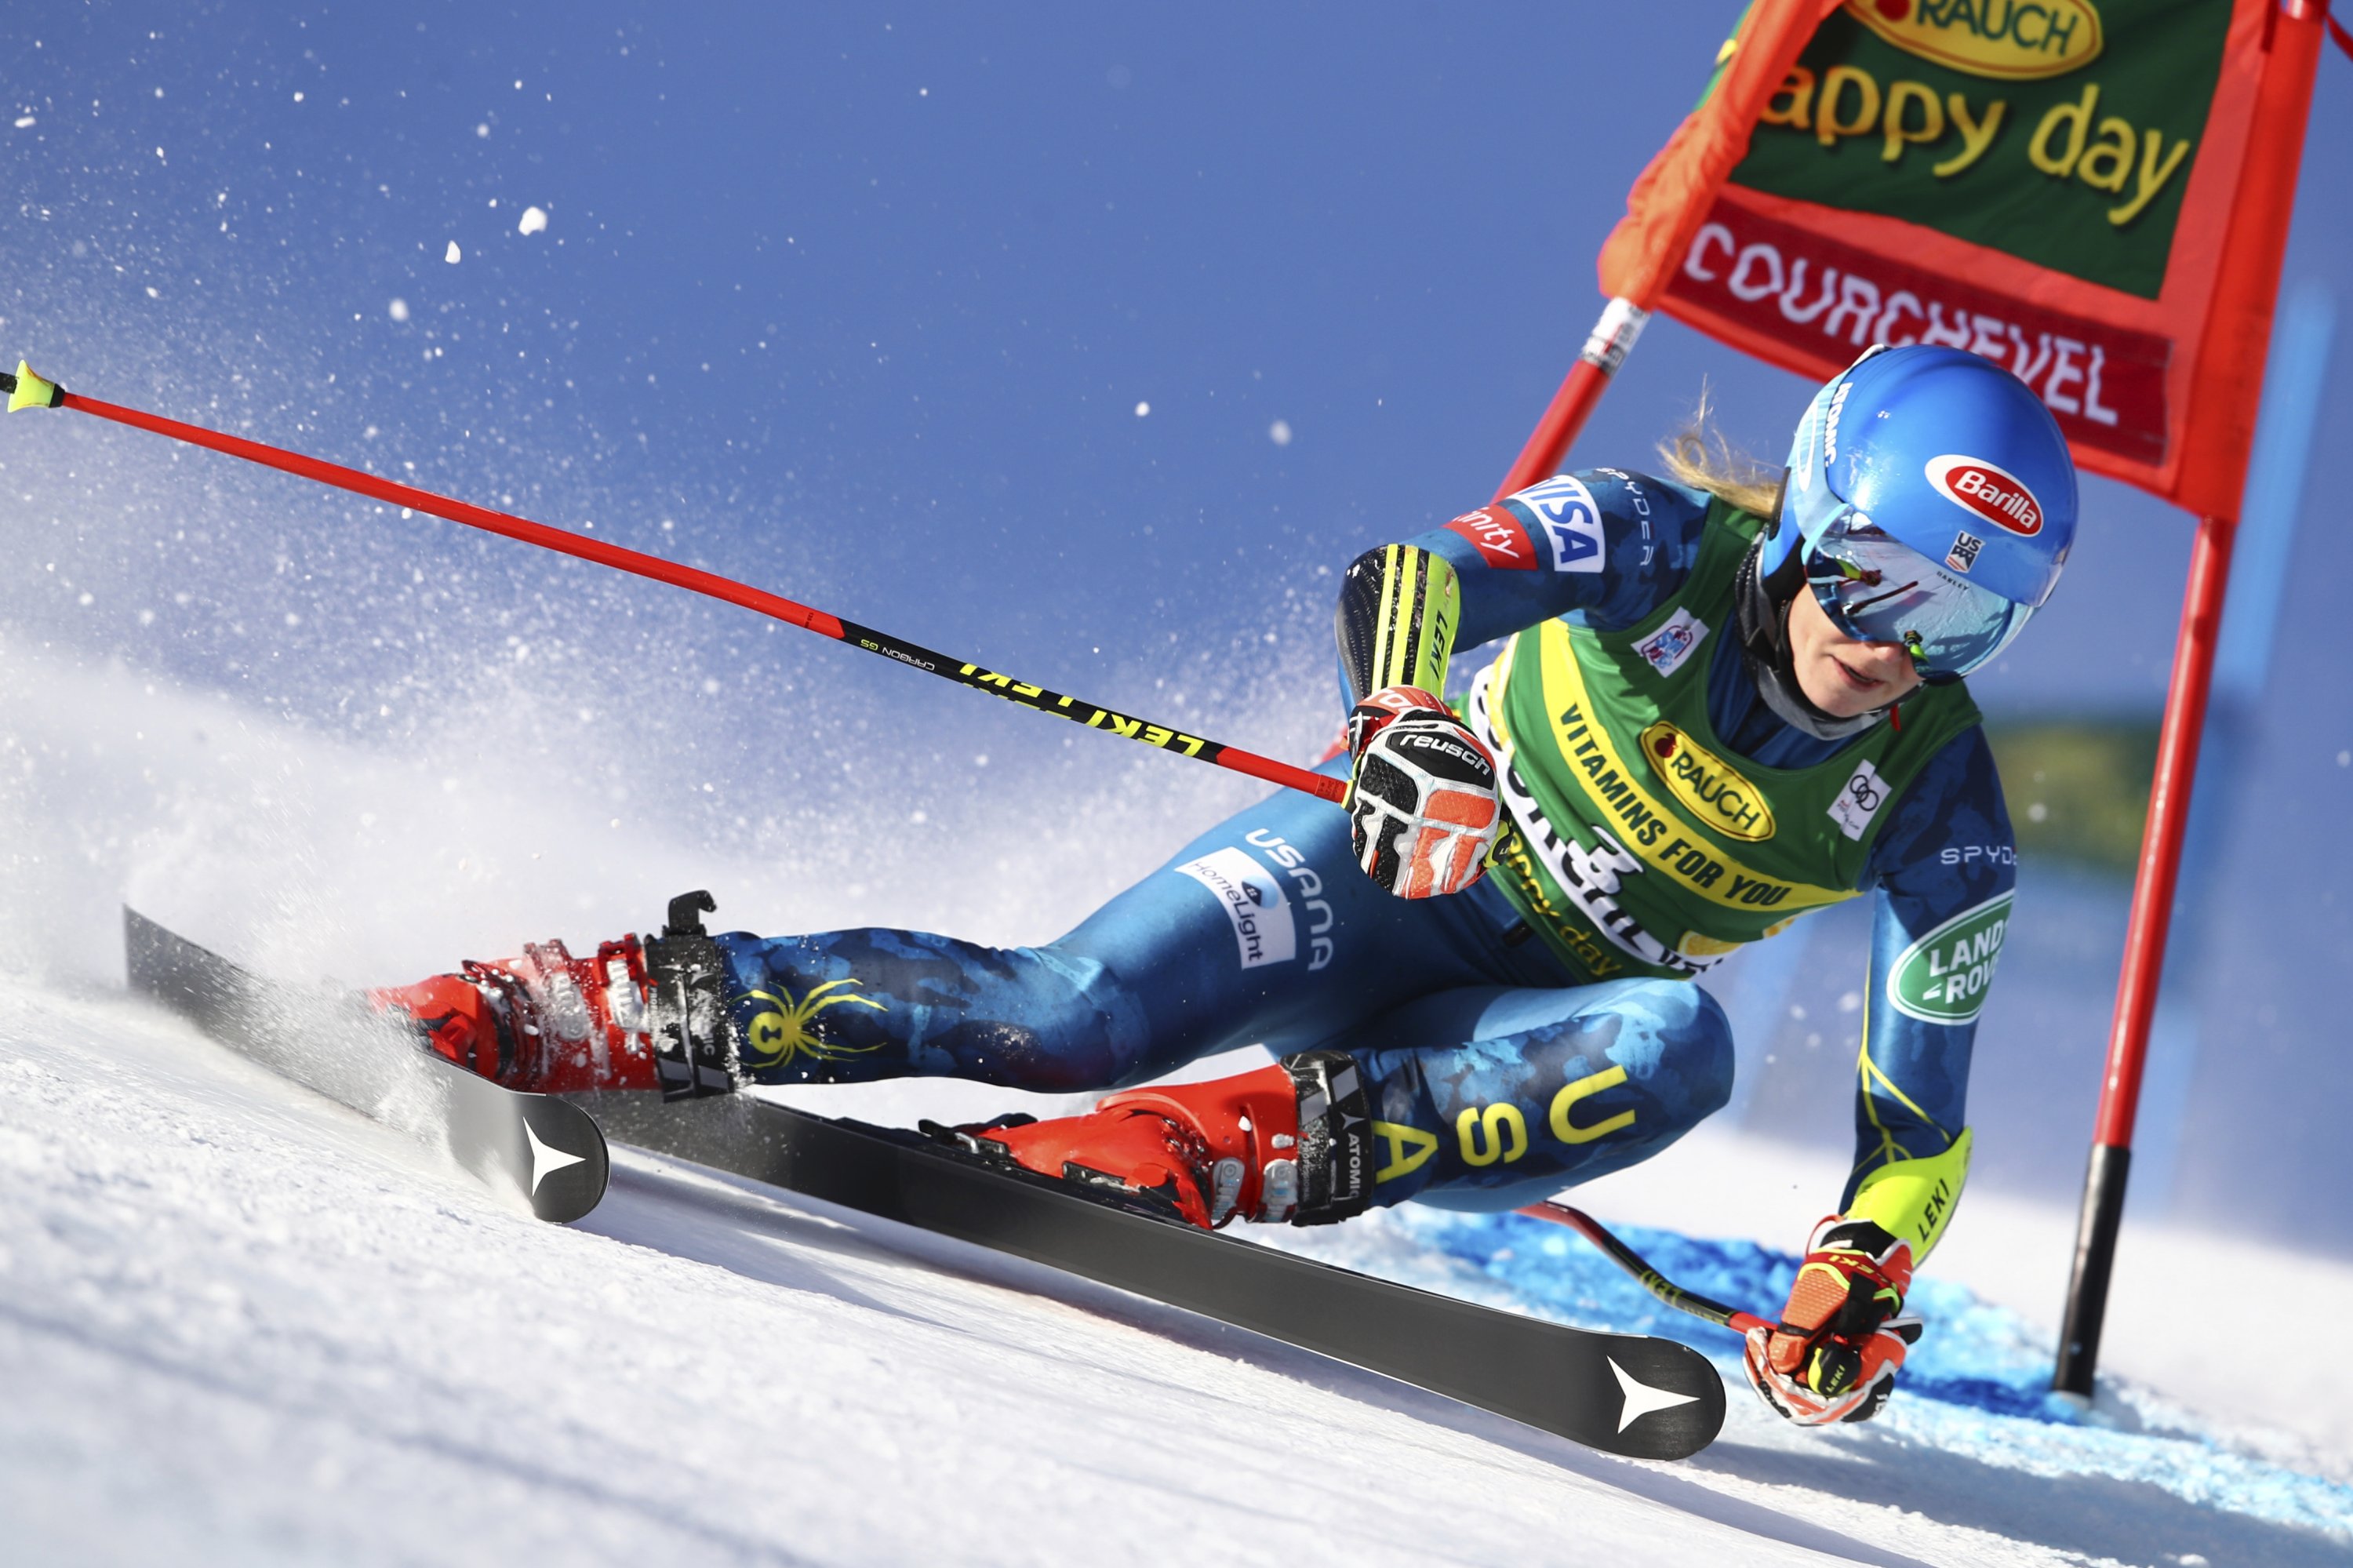 Mikaela Shiffrin wins her first World Cup ski race since January